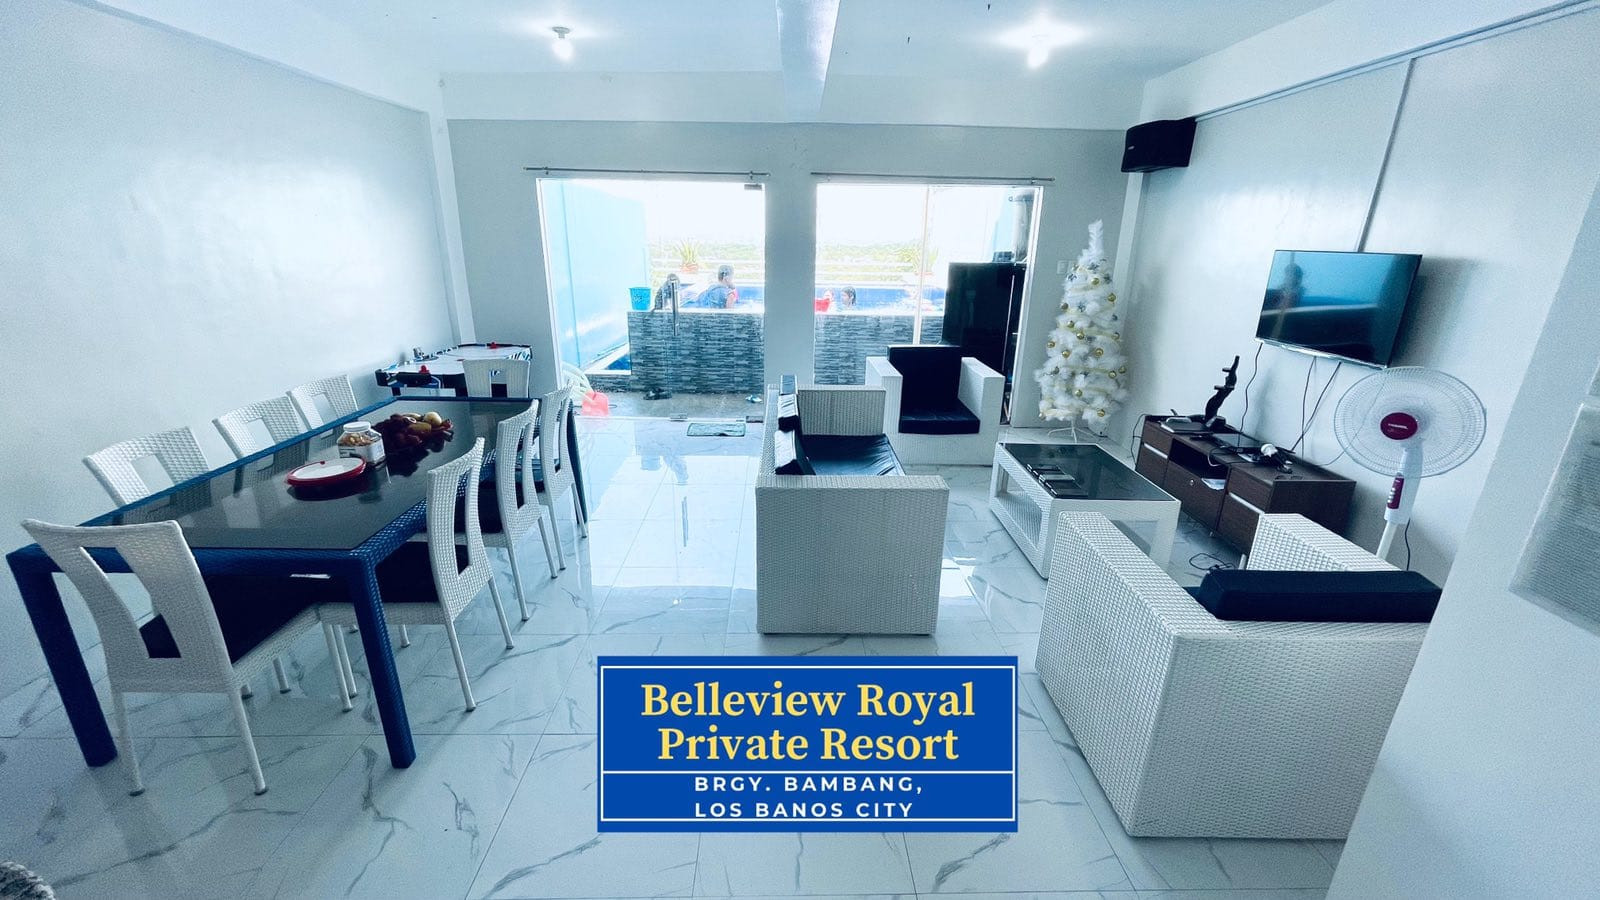 Belleview Royal Private Resort